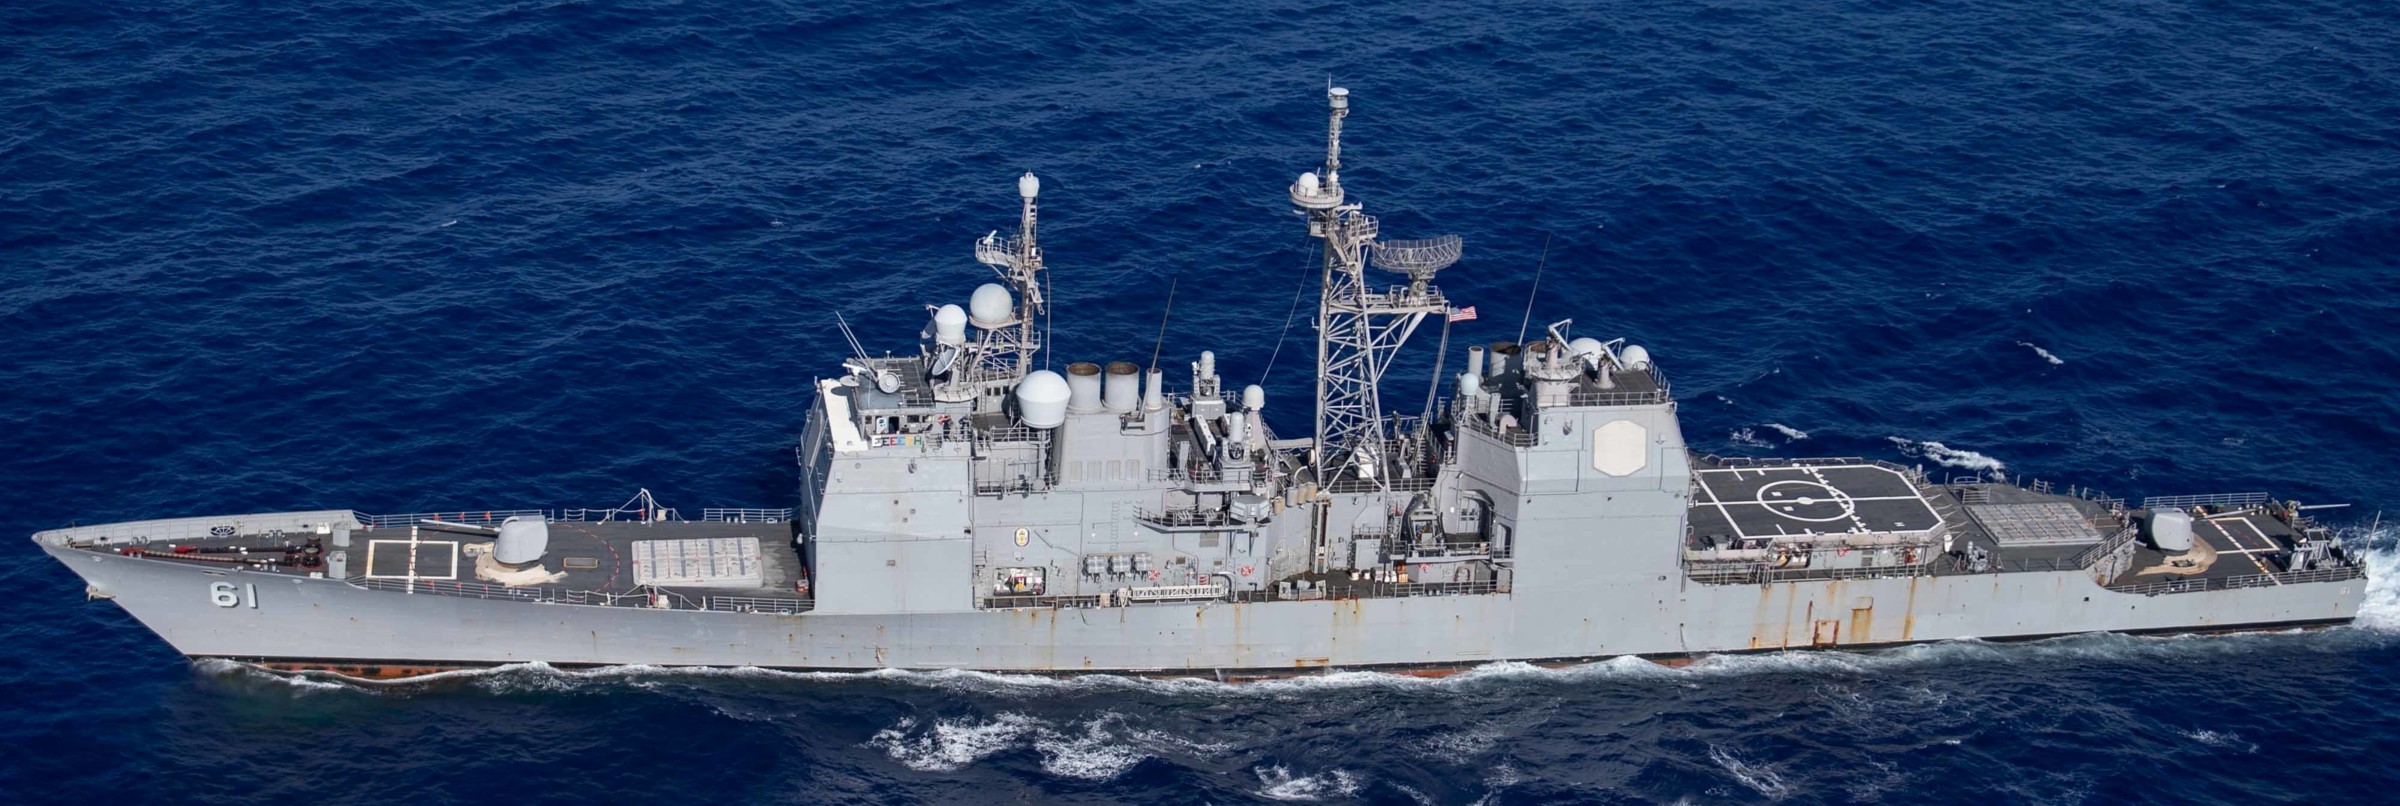 cg-61 uss monterey ticonderoga class guided missile cruiser aegis us navy 99